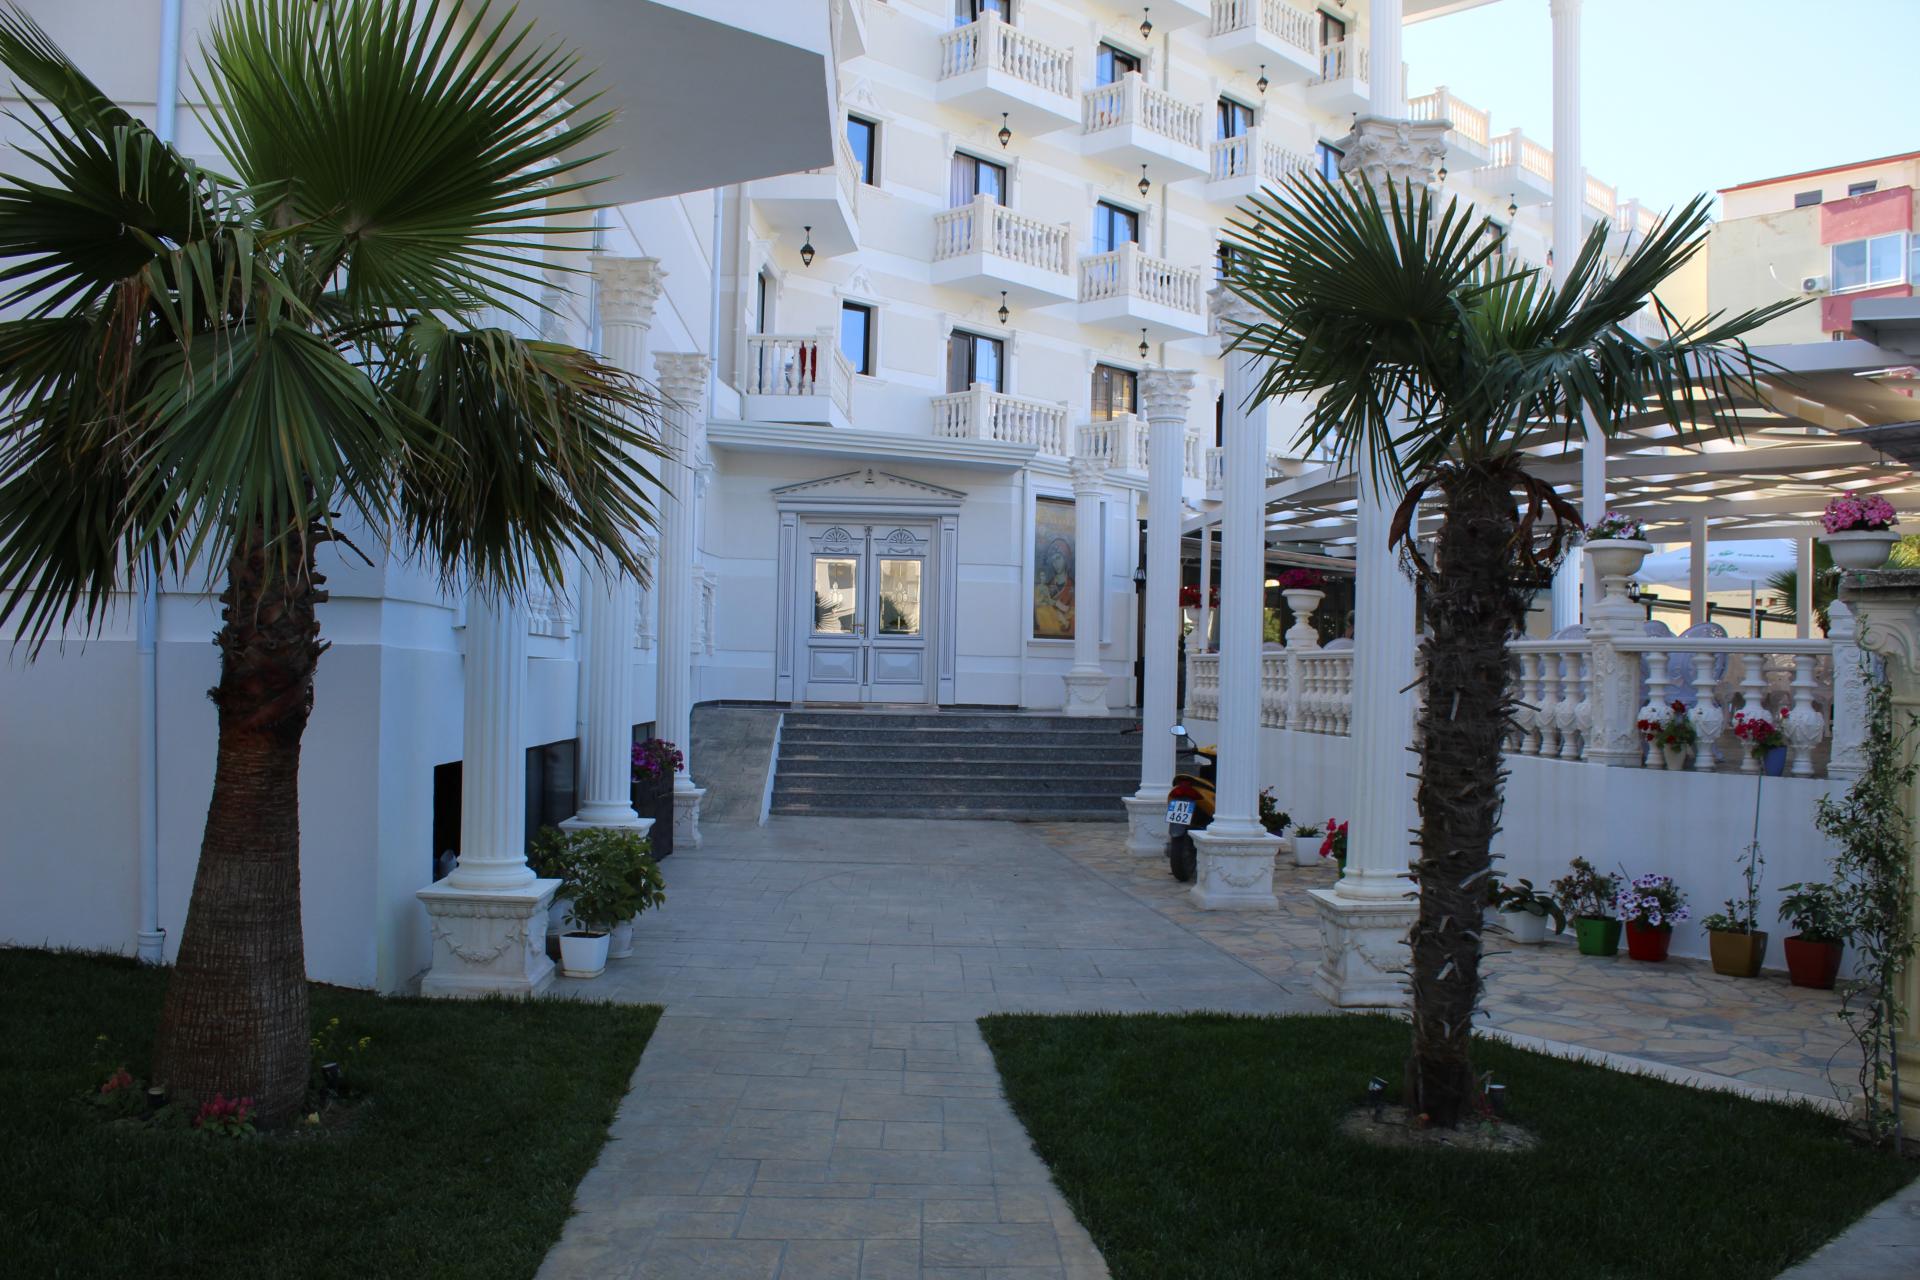 Hotel Onufri - Albania